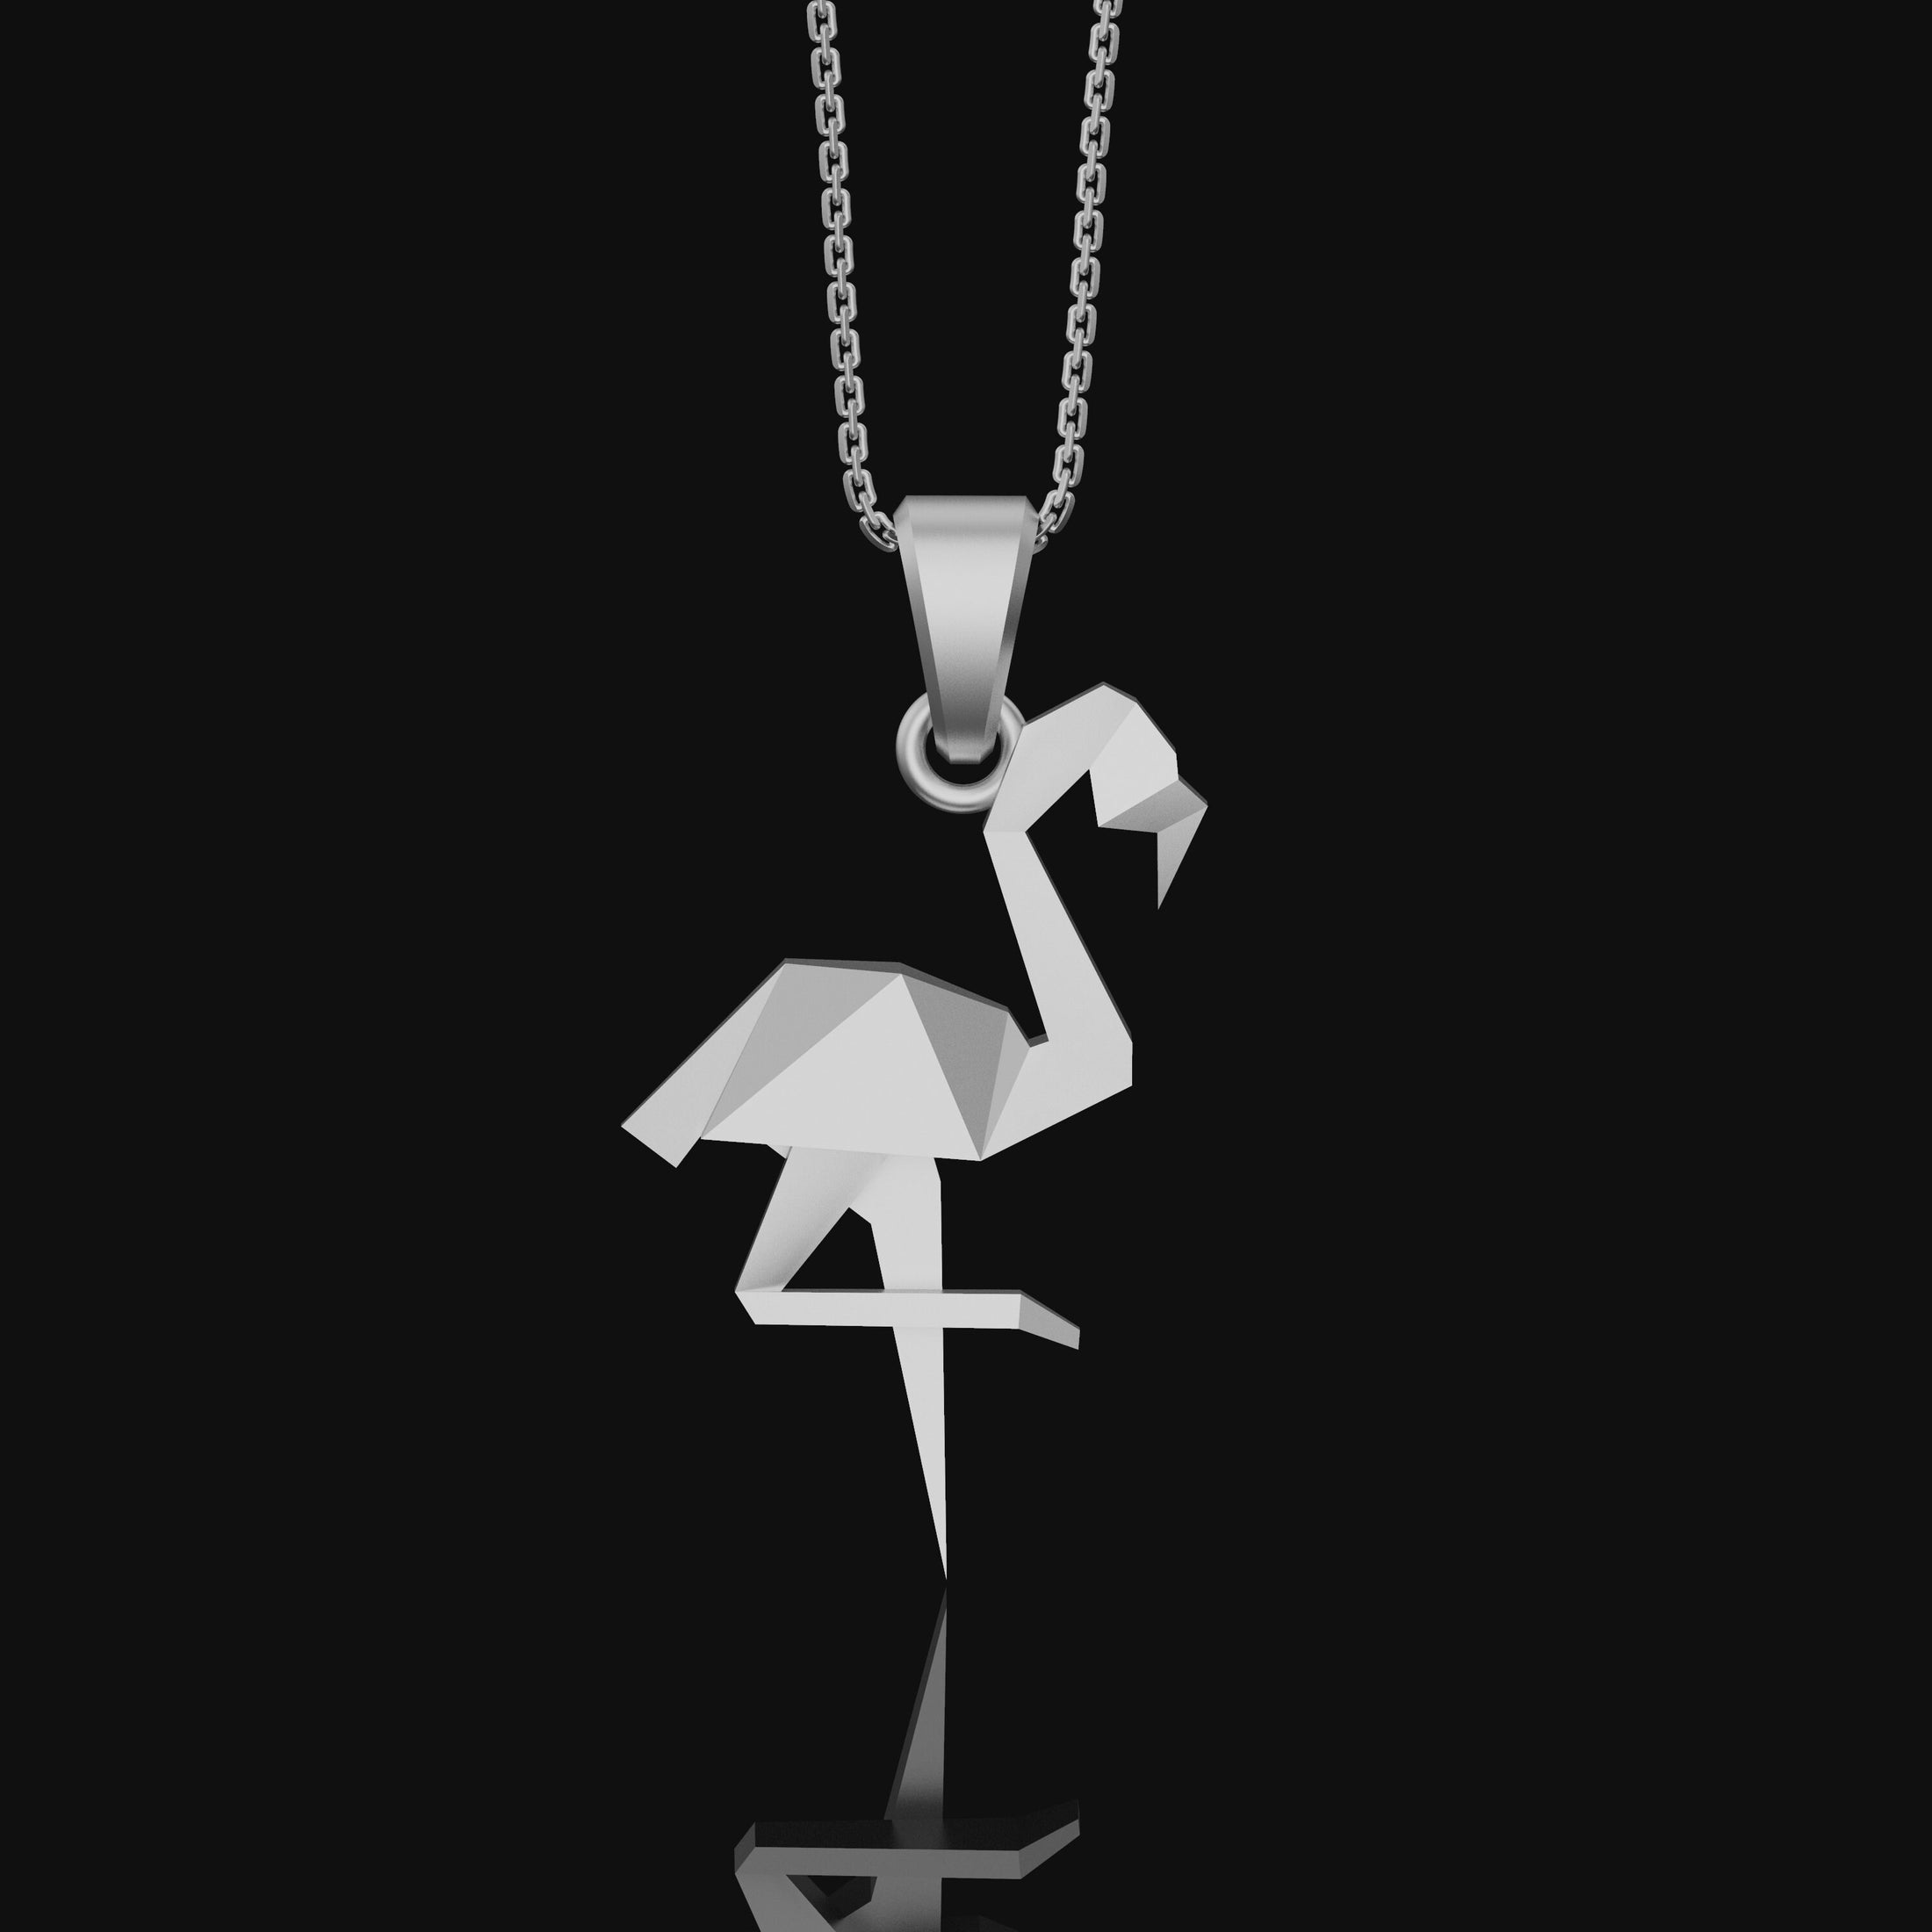 Silver Origami Flamingo Necklace Gift for her, Geometric Necklace, Bird Charm, Flamingo Pendant, Christmas Gift, Origami Animal Polished Finish